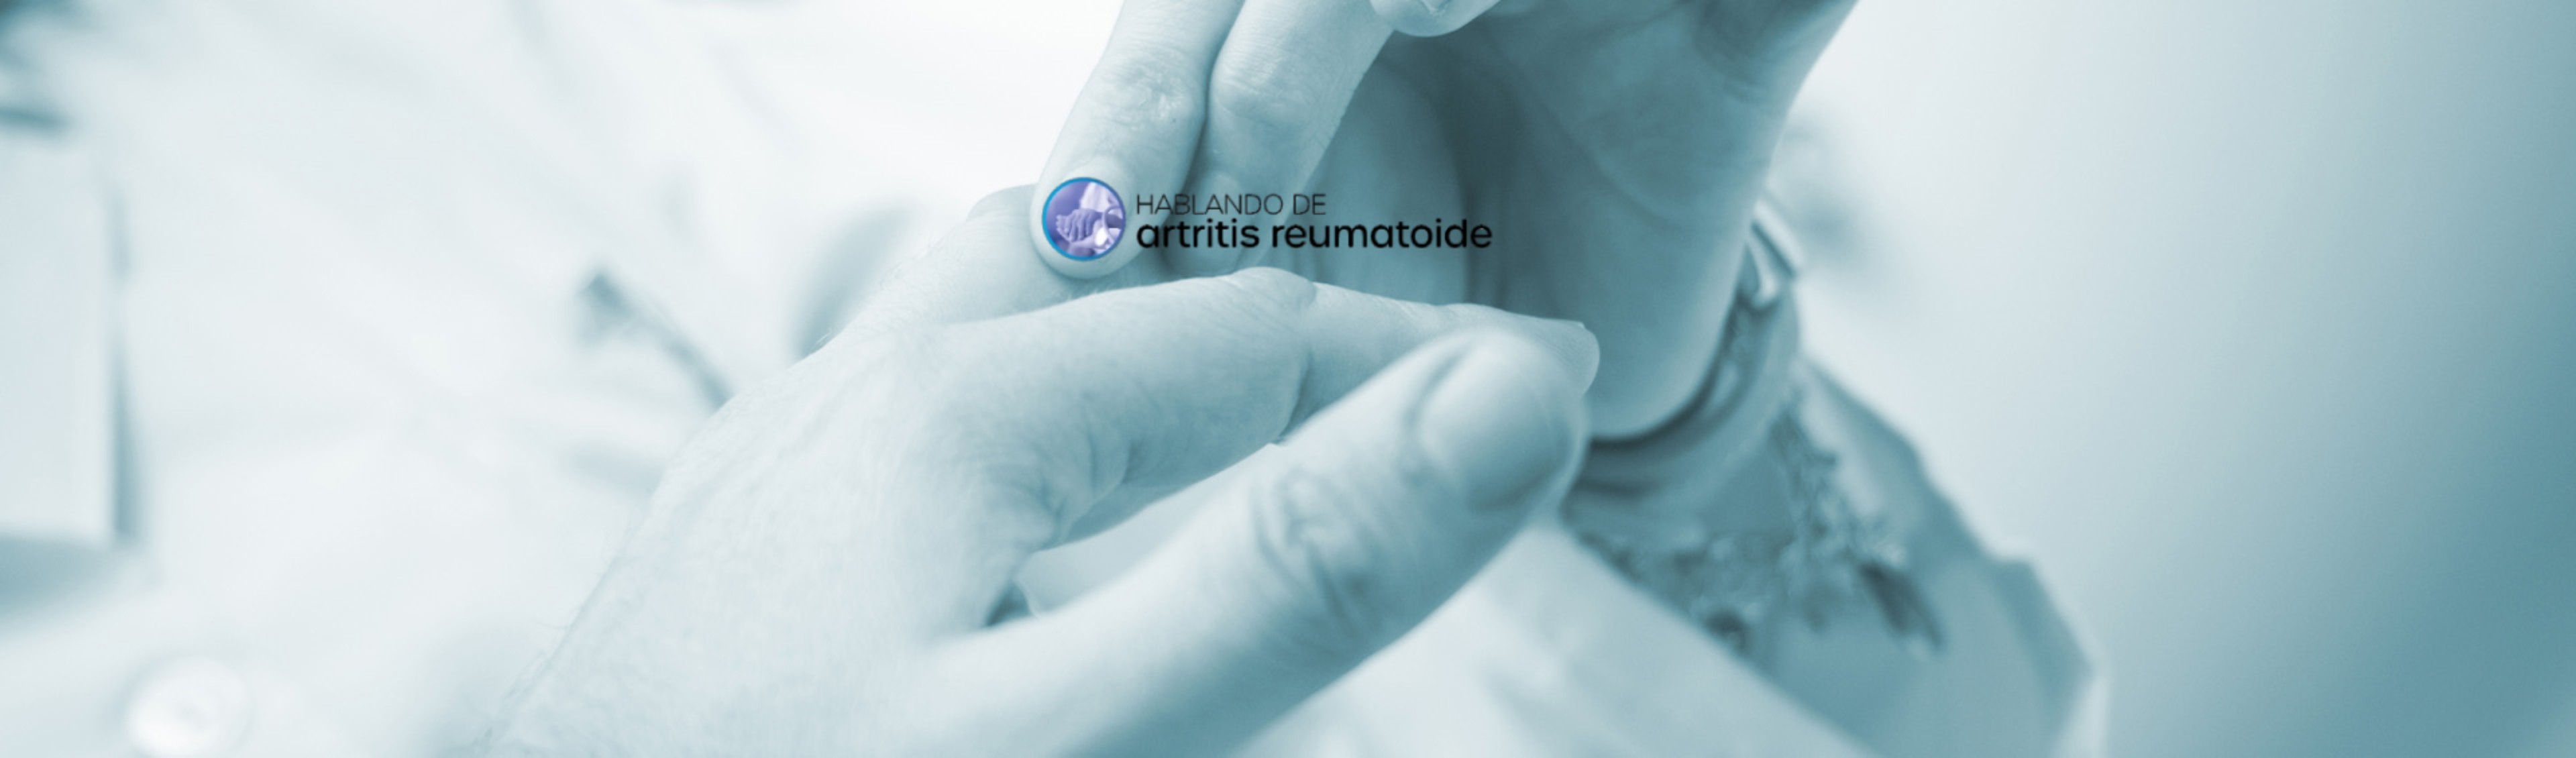 blog-hablando-de-artritis-reumatoide